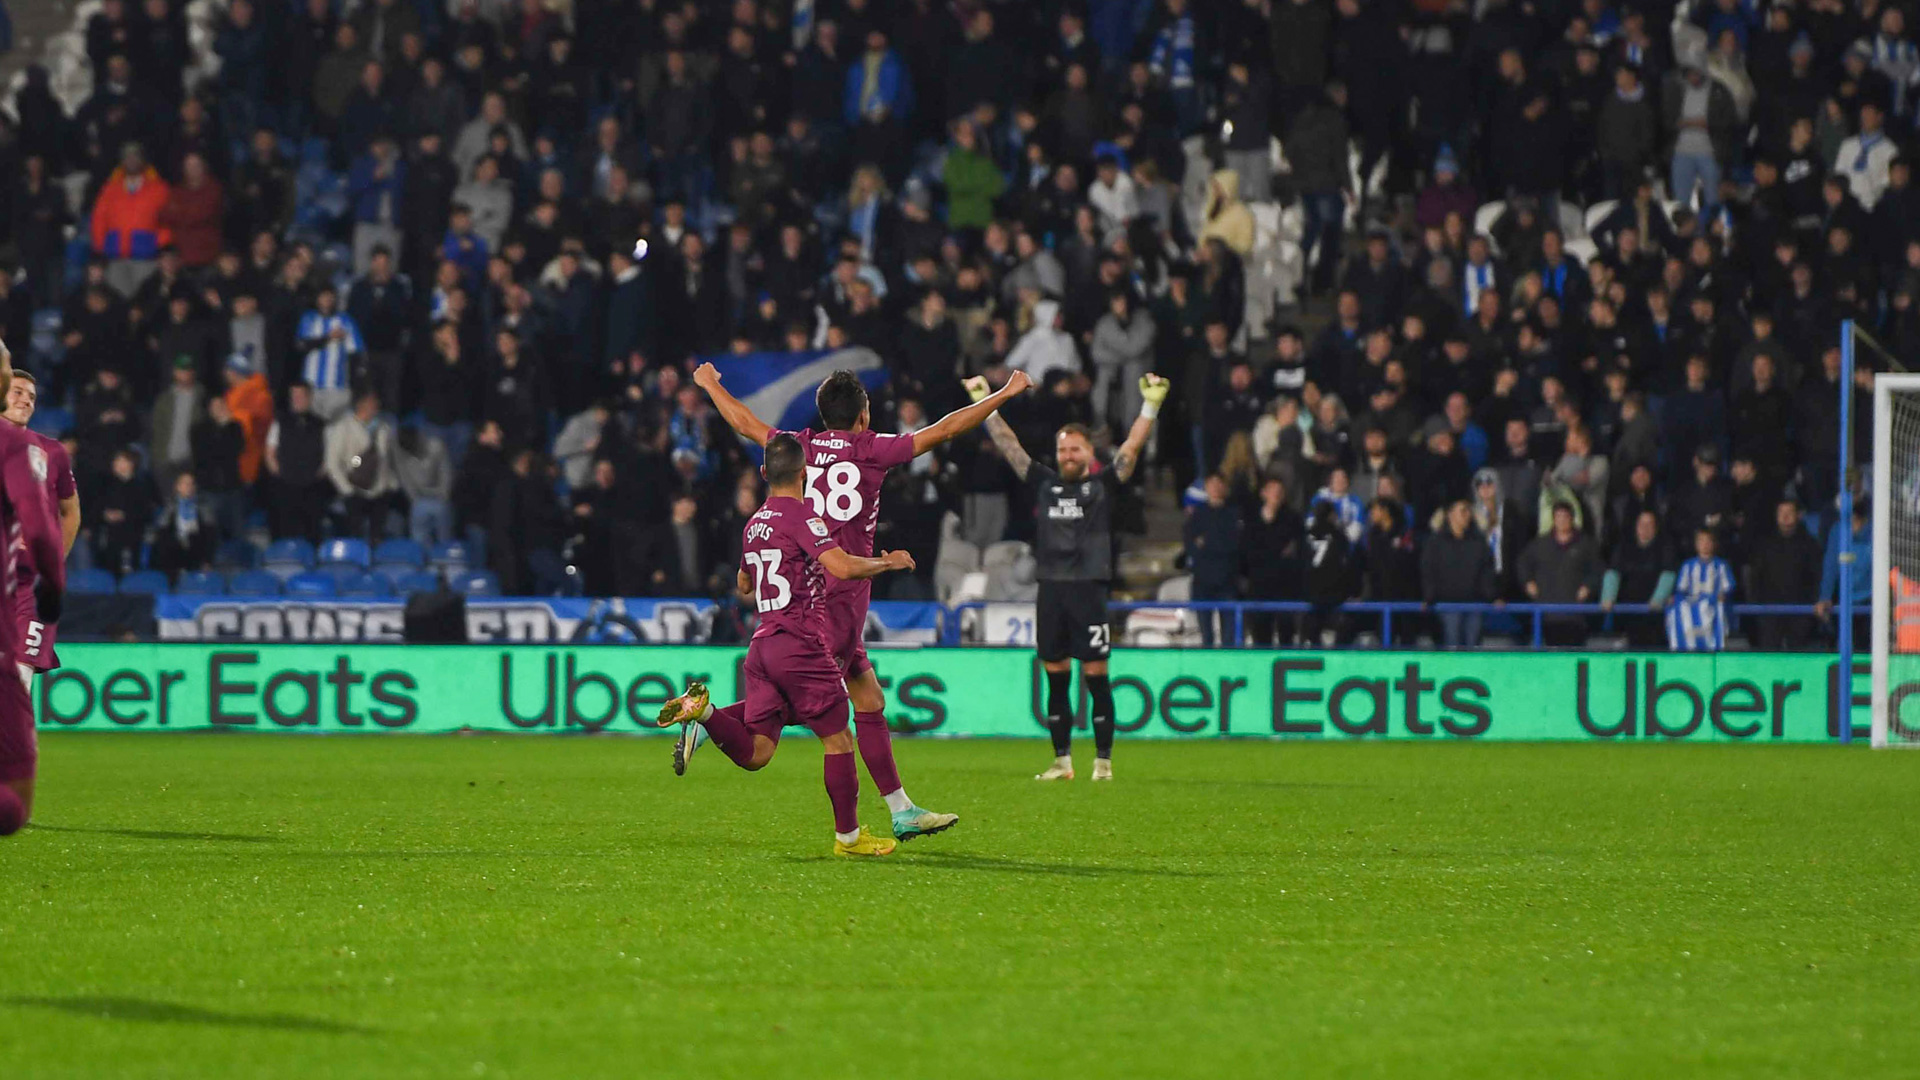 Huddersfield Town 0-4 Cardiff City: Bluebirds seal emphatic win